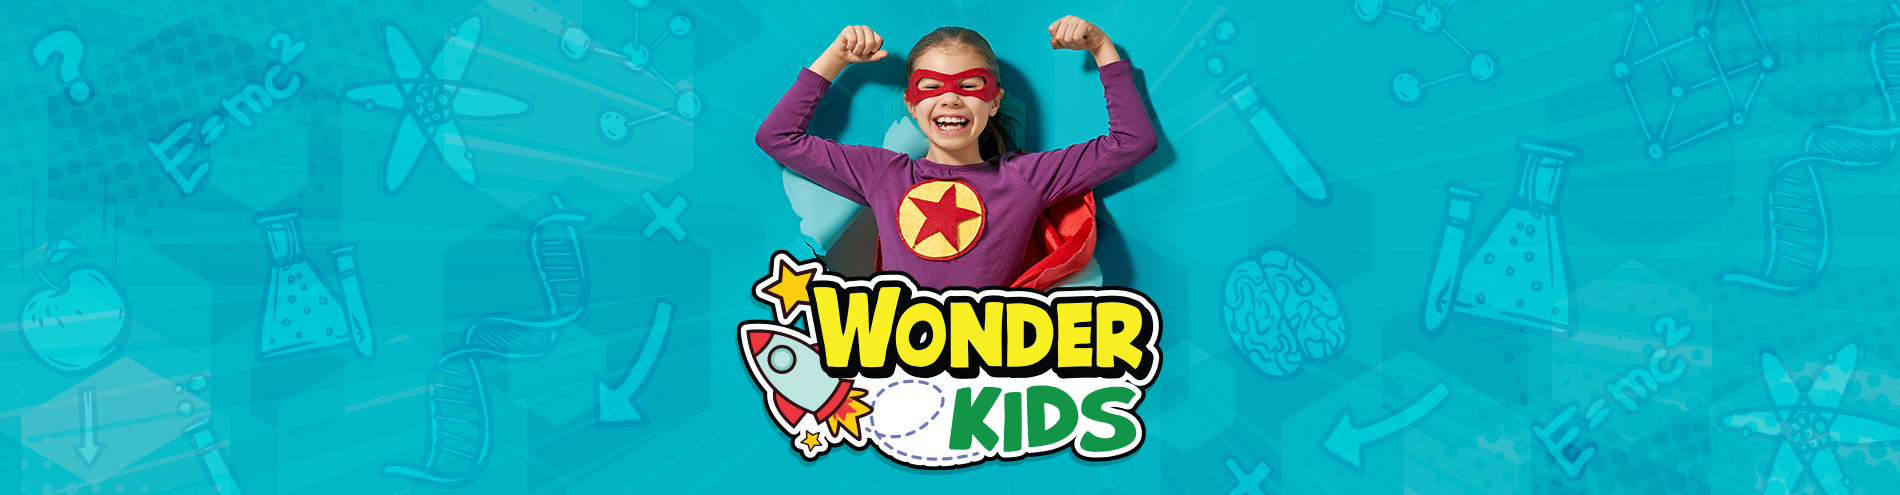 Wonder Kids Header Girl